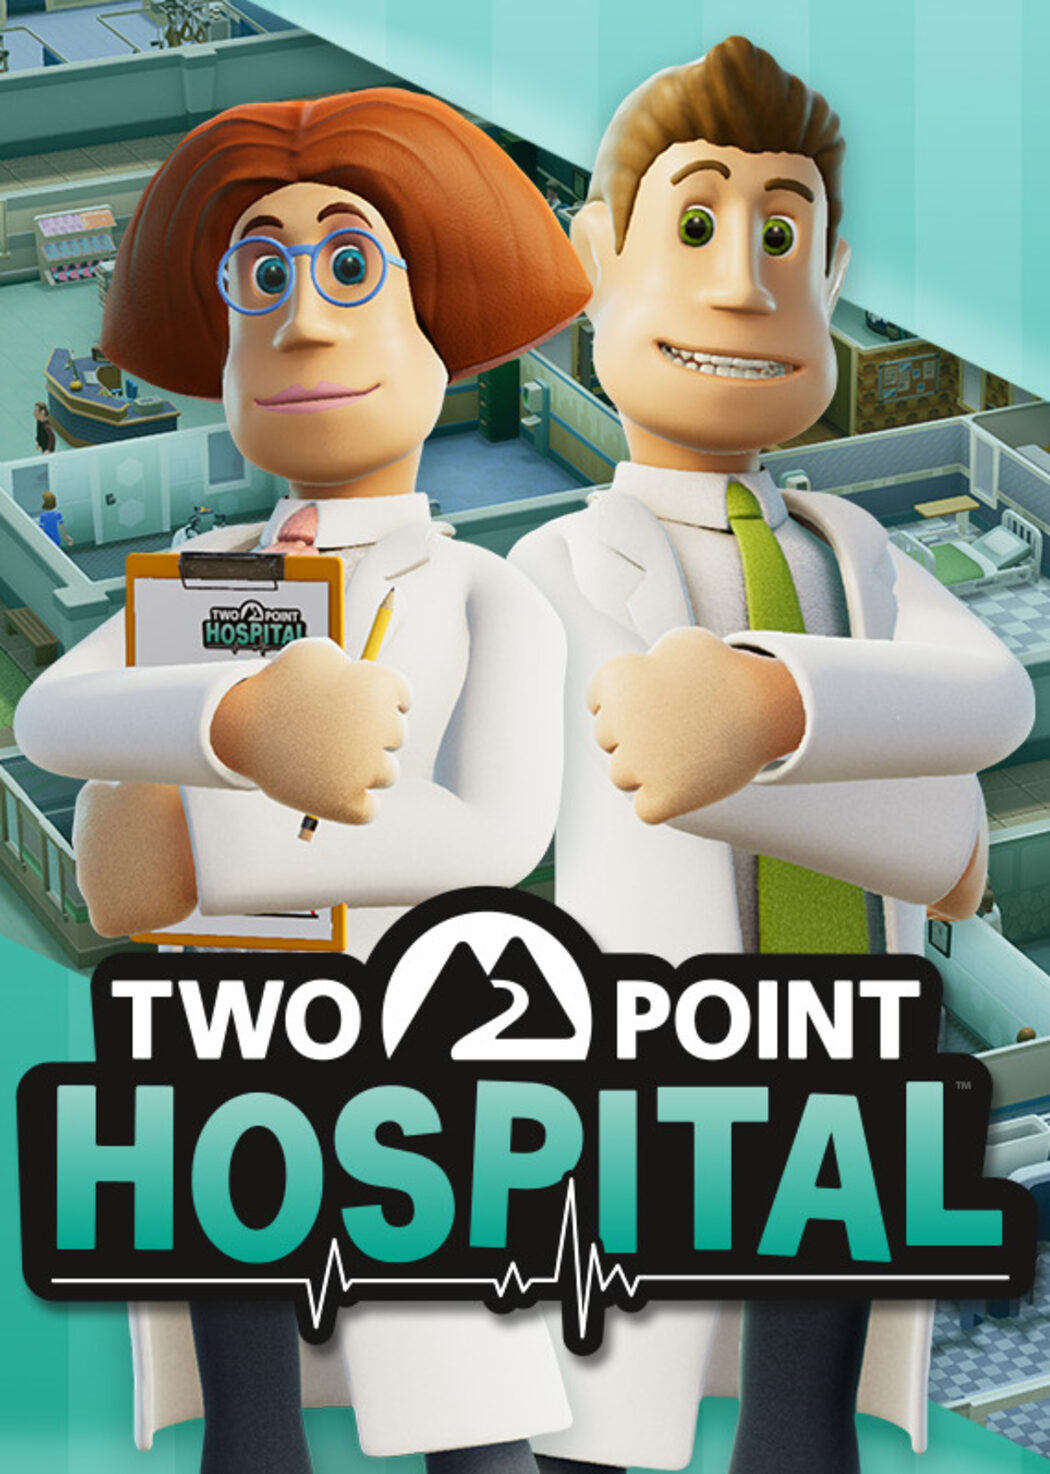 Buy Two Point Hospital - Bigfoot (DLC) PC Steam key! Cheap price